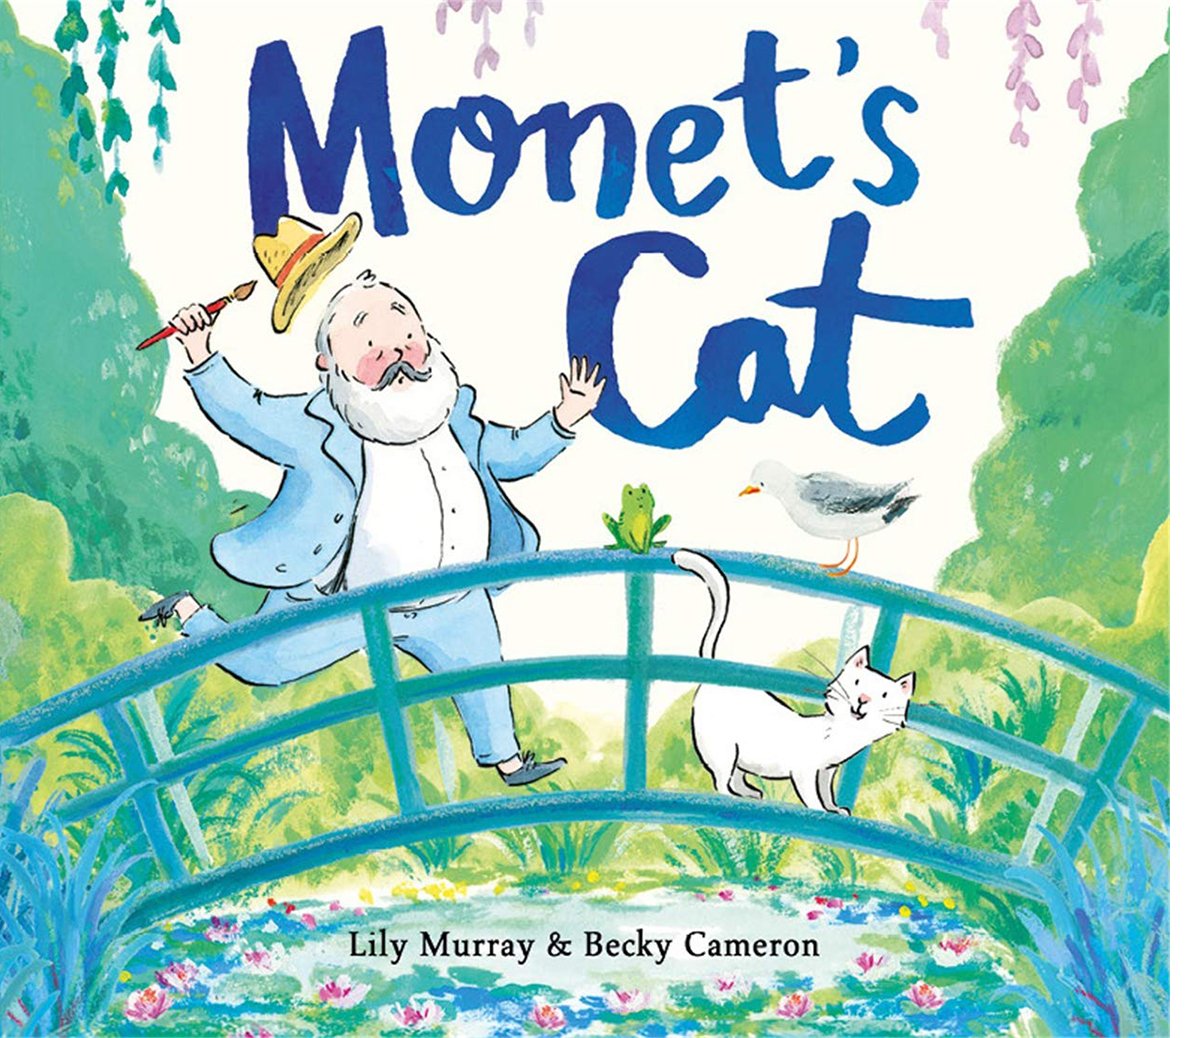 becky-cameron-monets-cat-cover.jpg